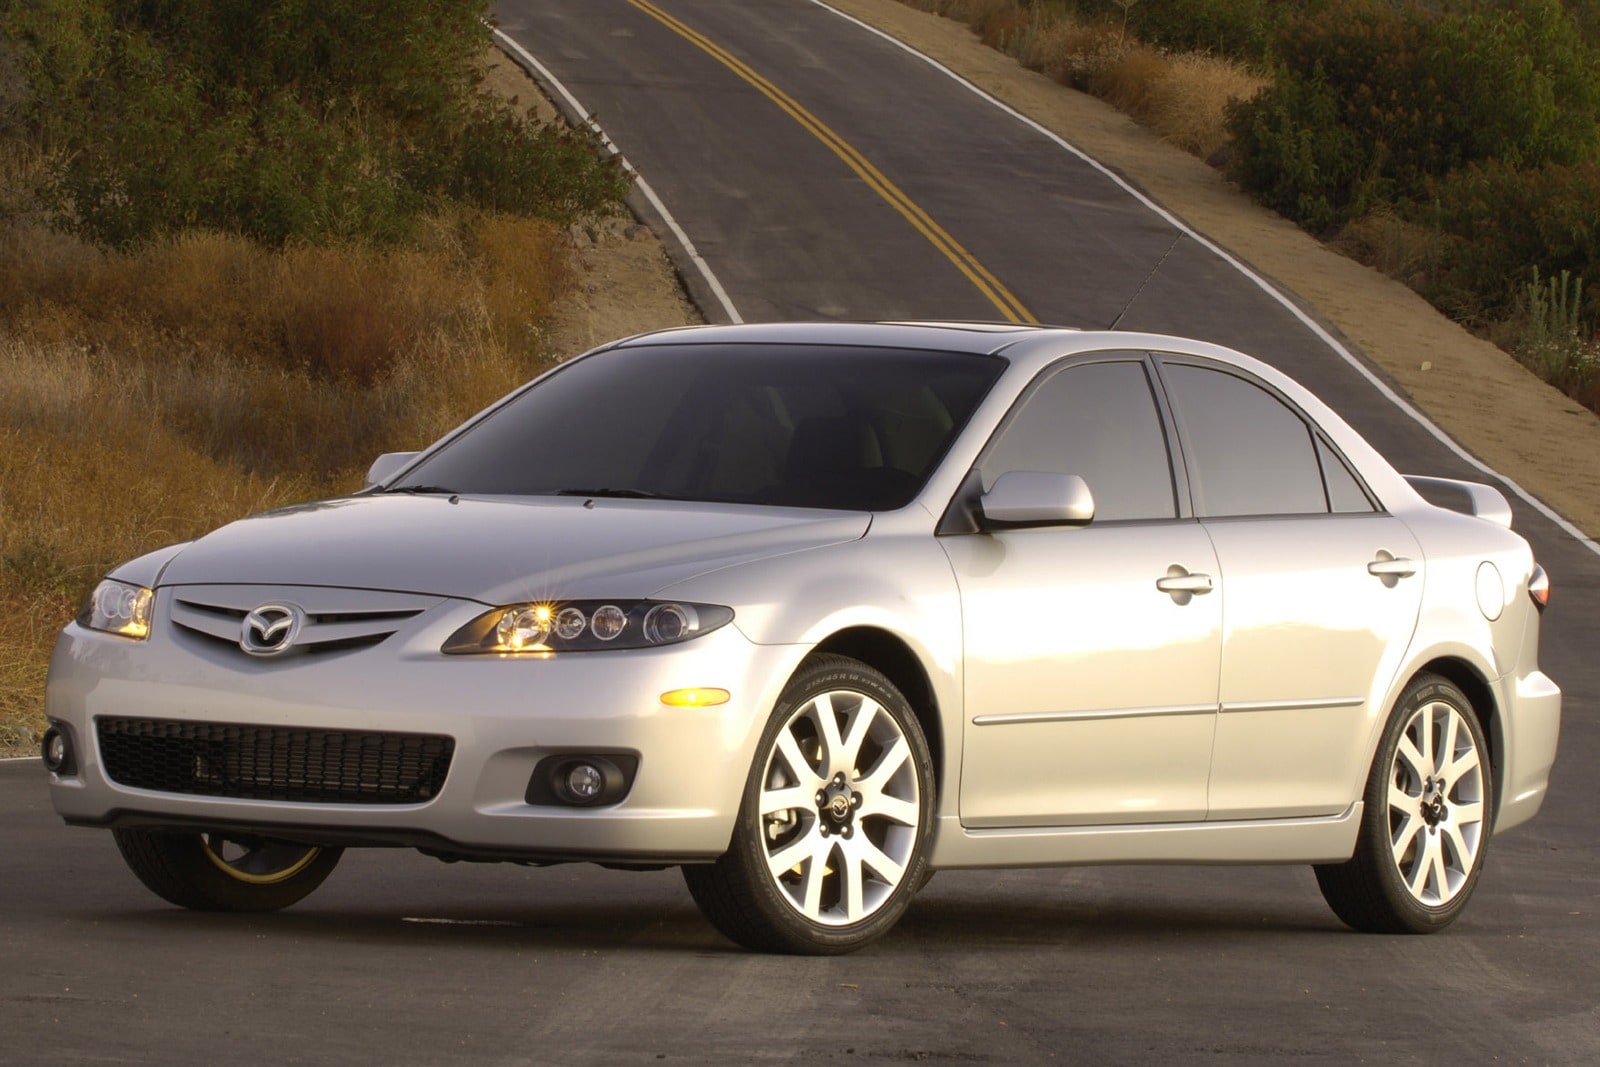 Used 2008 Mazda 6 Sedan Review | Edmunds